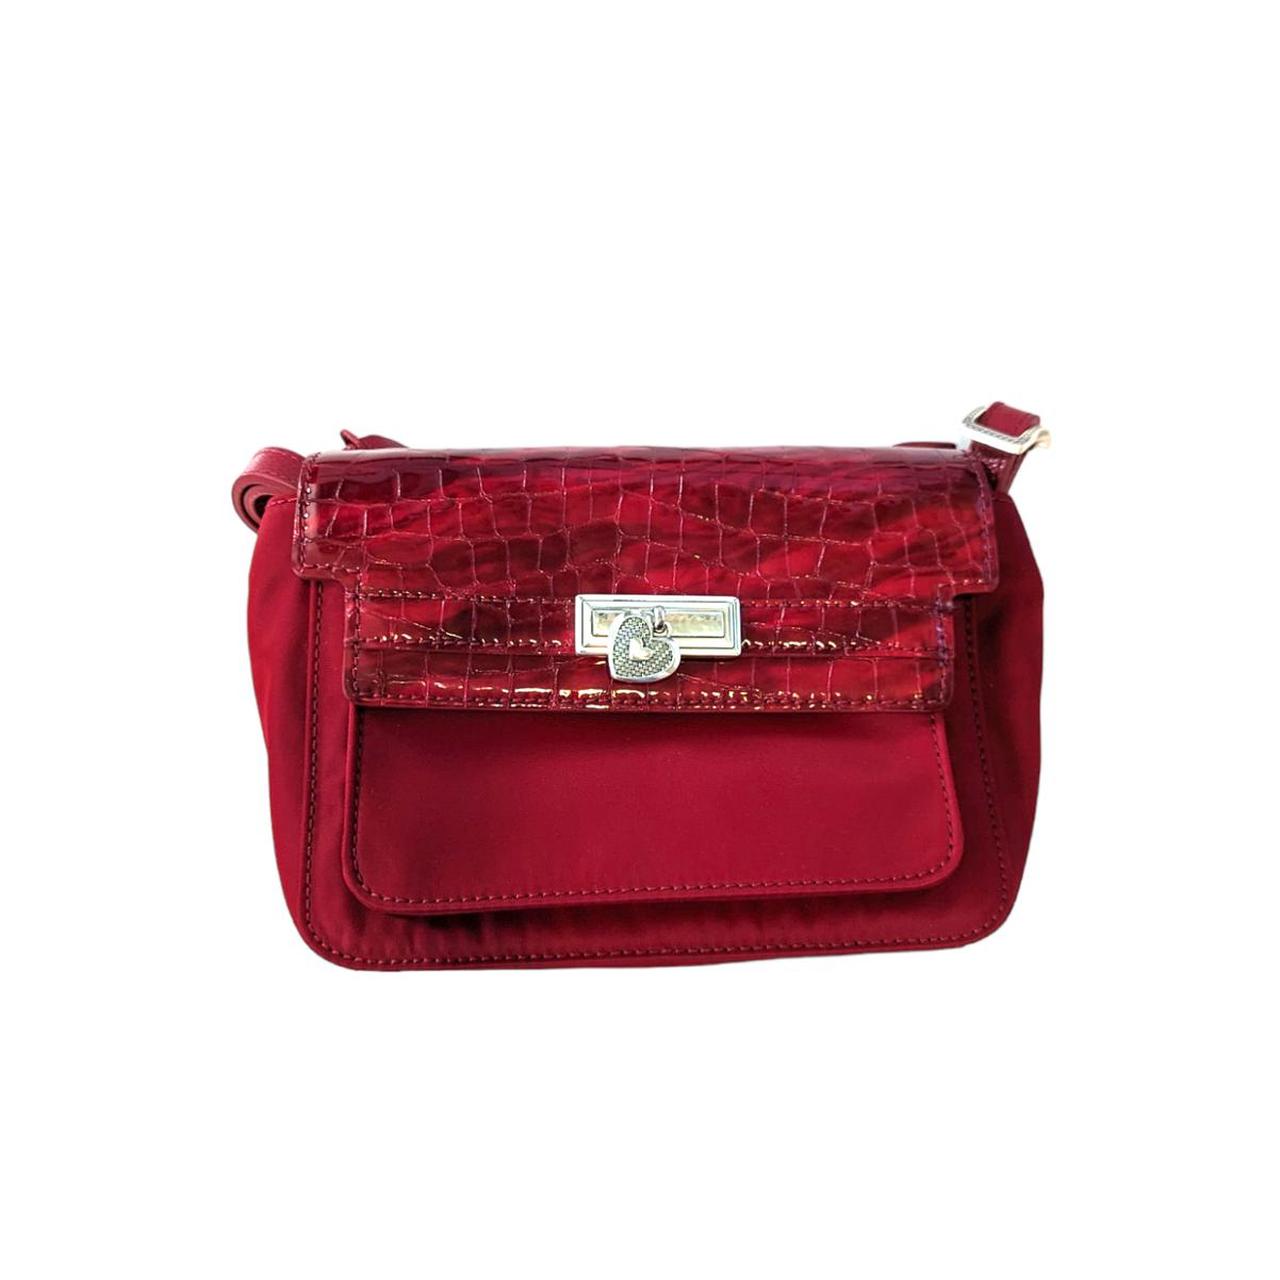 Brighton Red Suede Leather Braided Top Handle Handbag | eBay